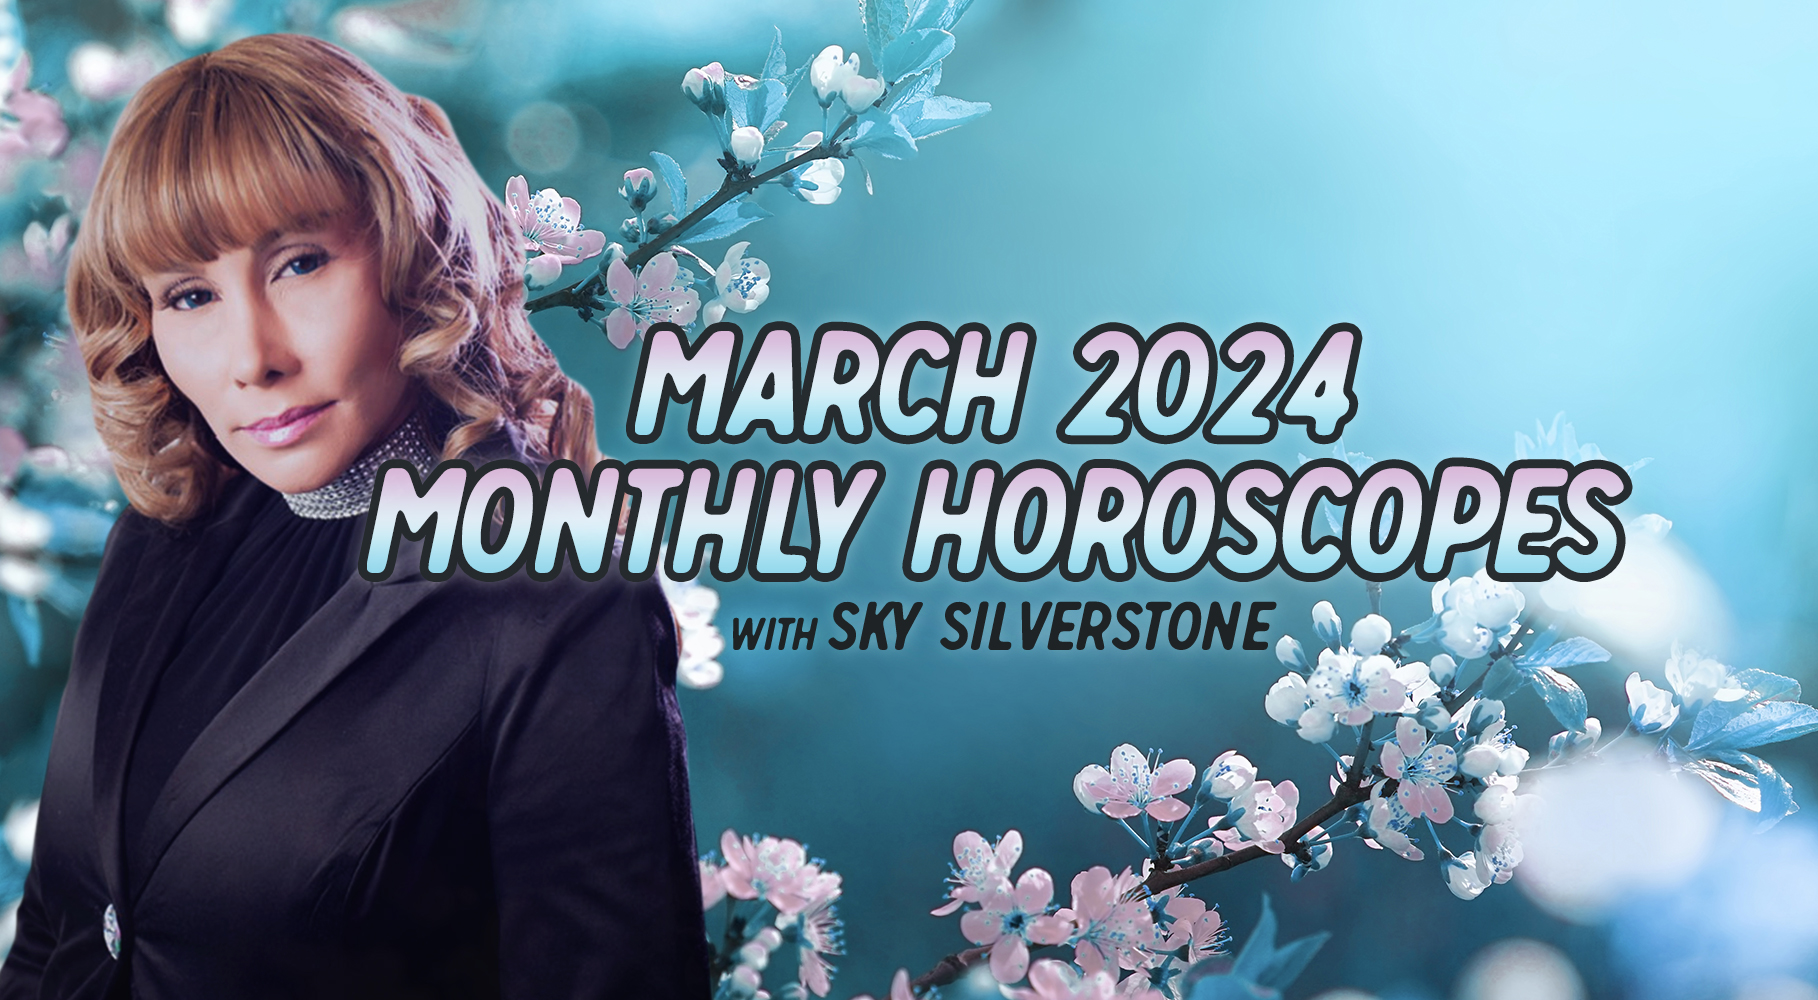 Horoscopes: March 2024 Monthly Horoscopes by Sky Silverstone